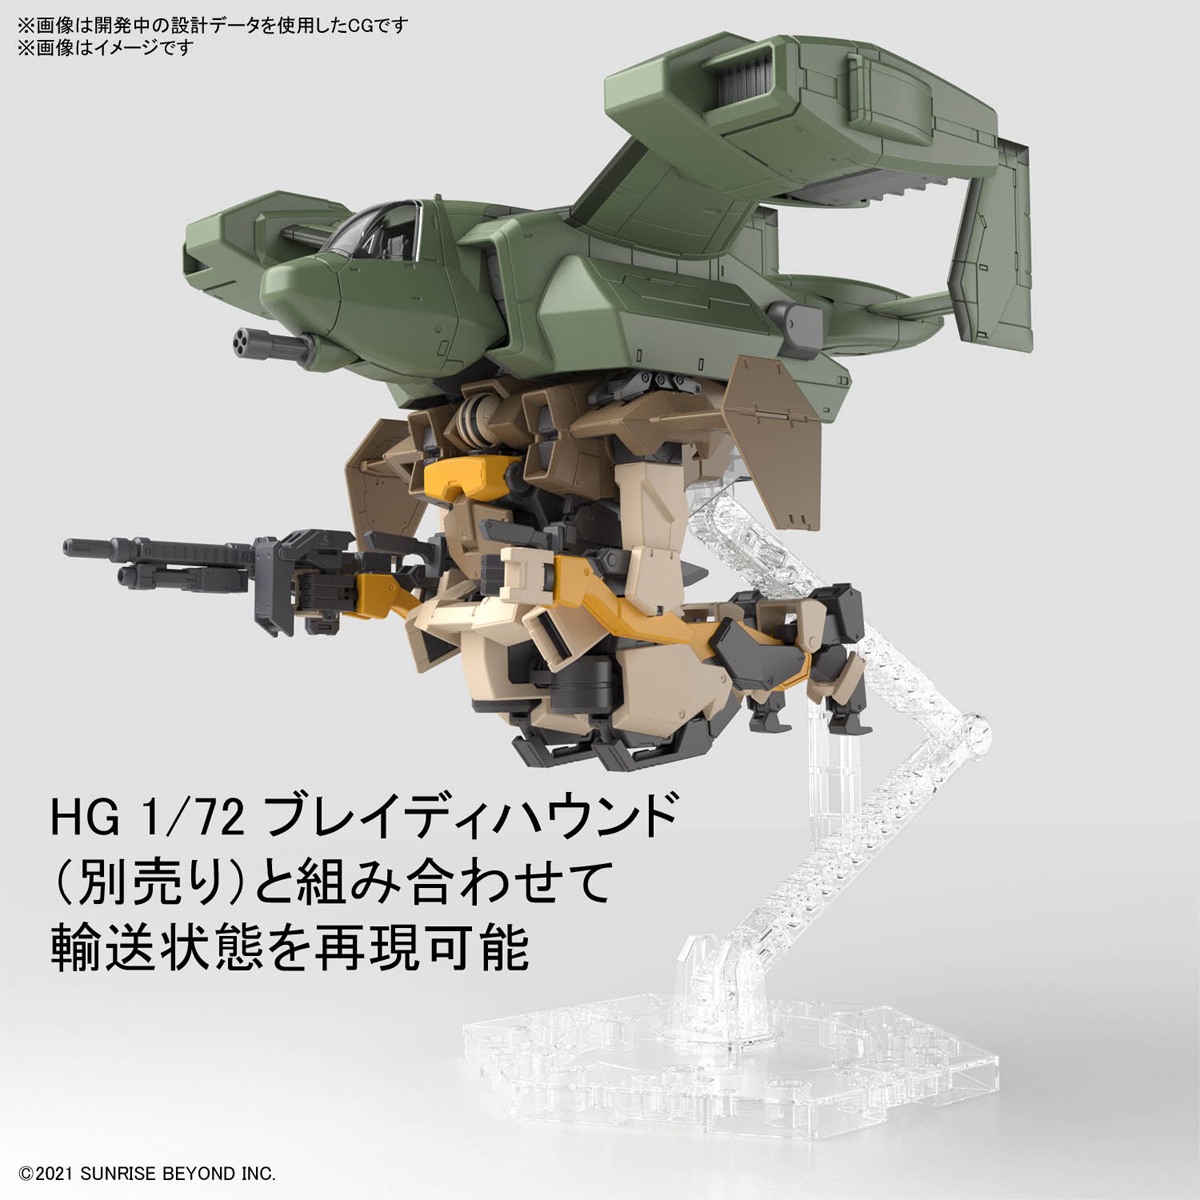 HG 1/72『ブレイディハウンド』境界戦機 プラモデル-011